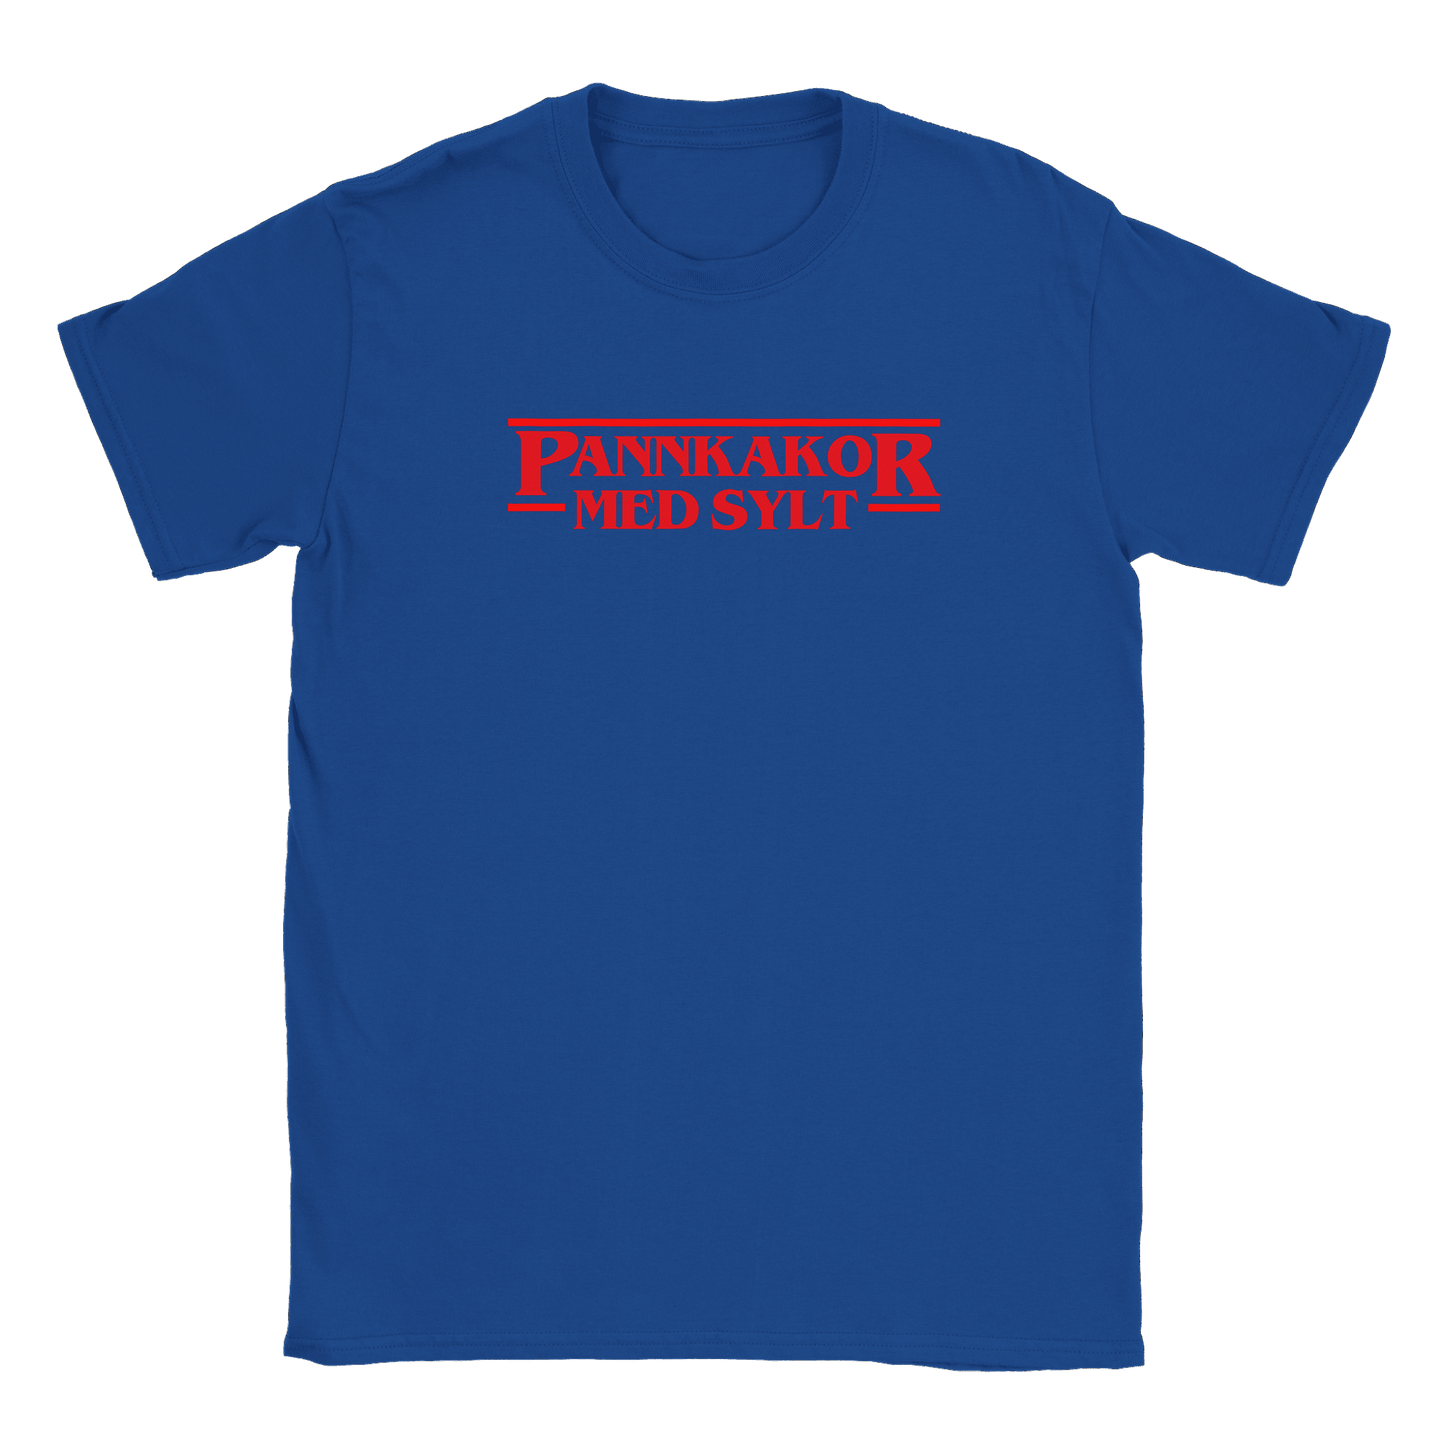 Pannkakor med sylt - T-shirt Royal